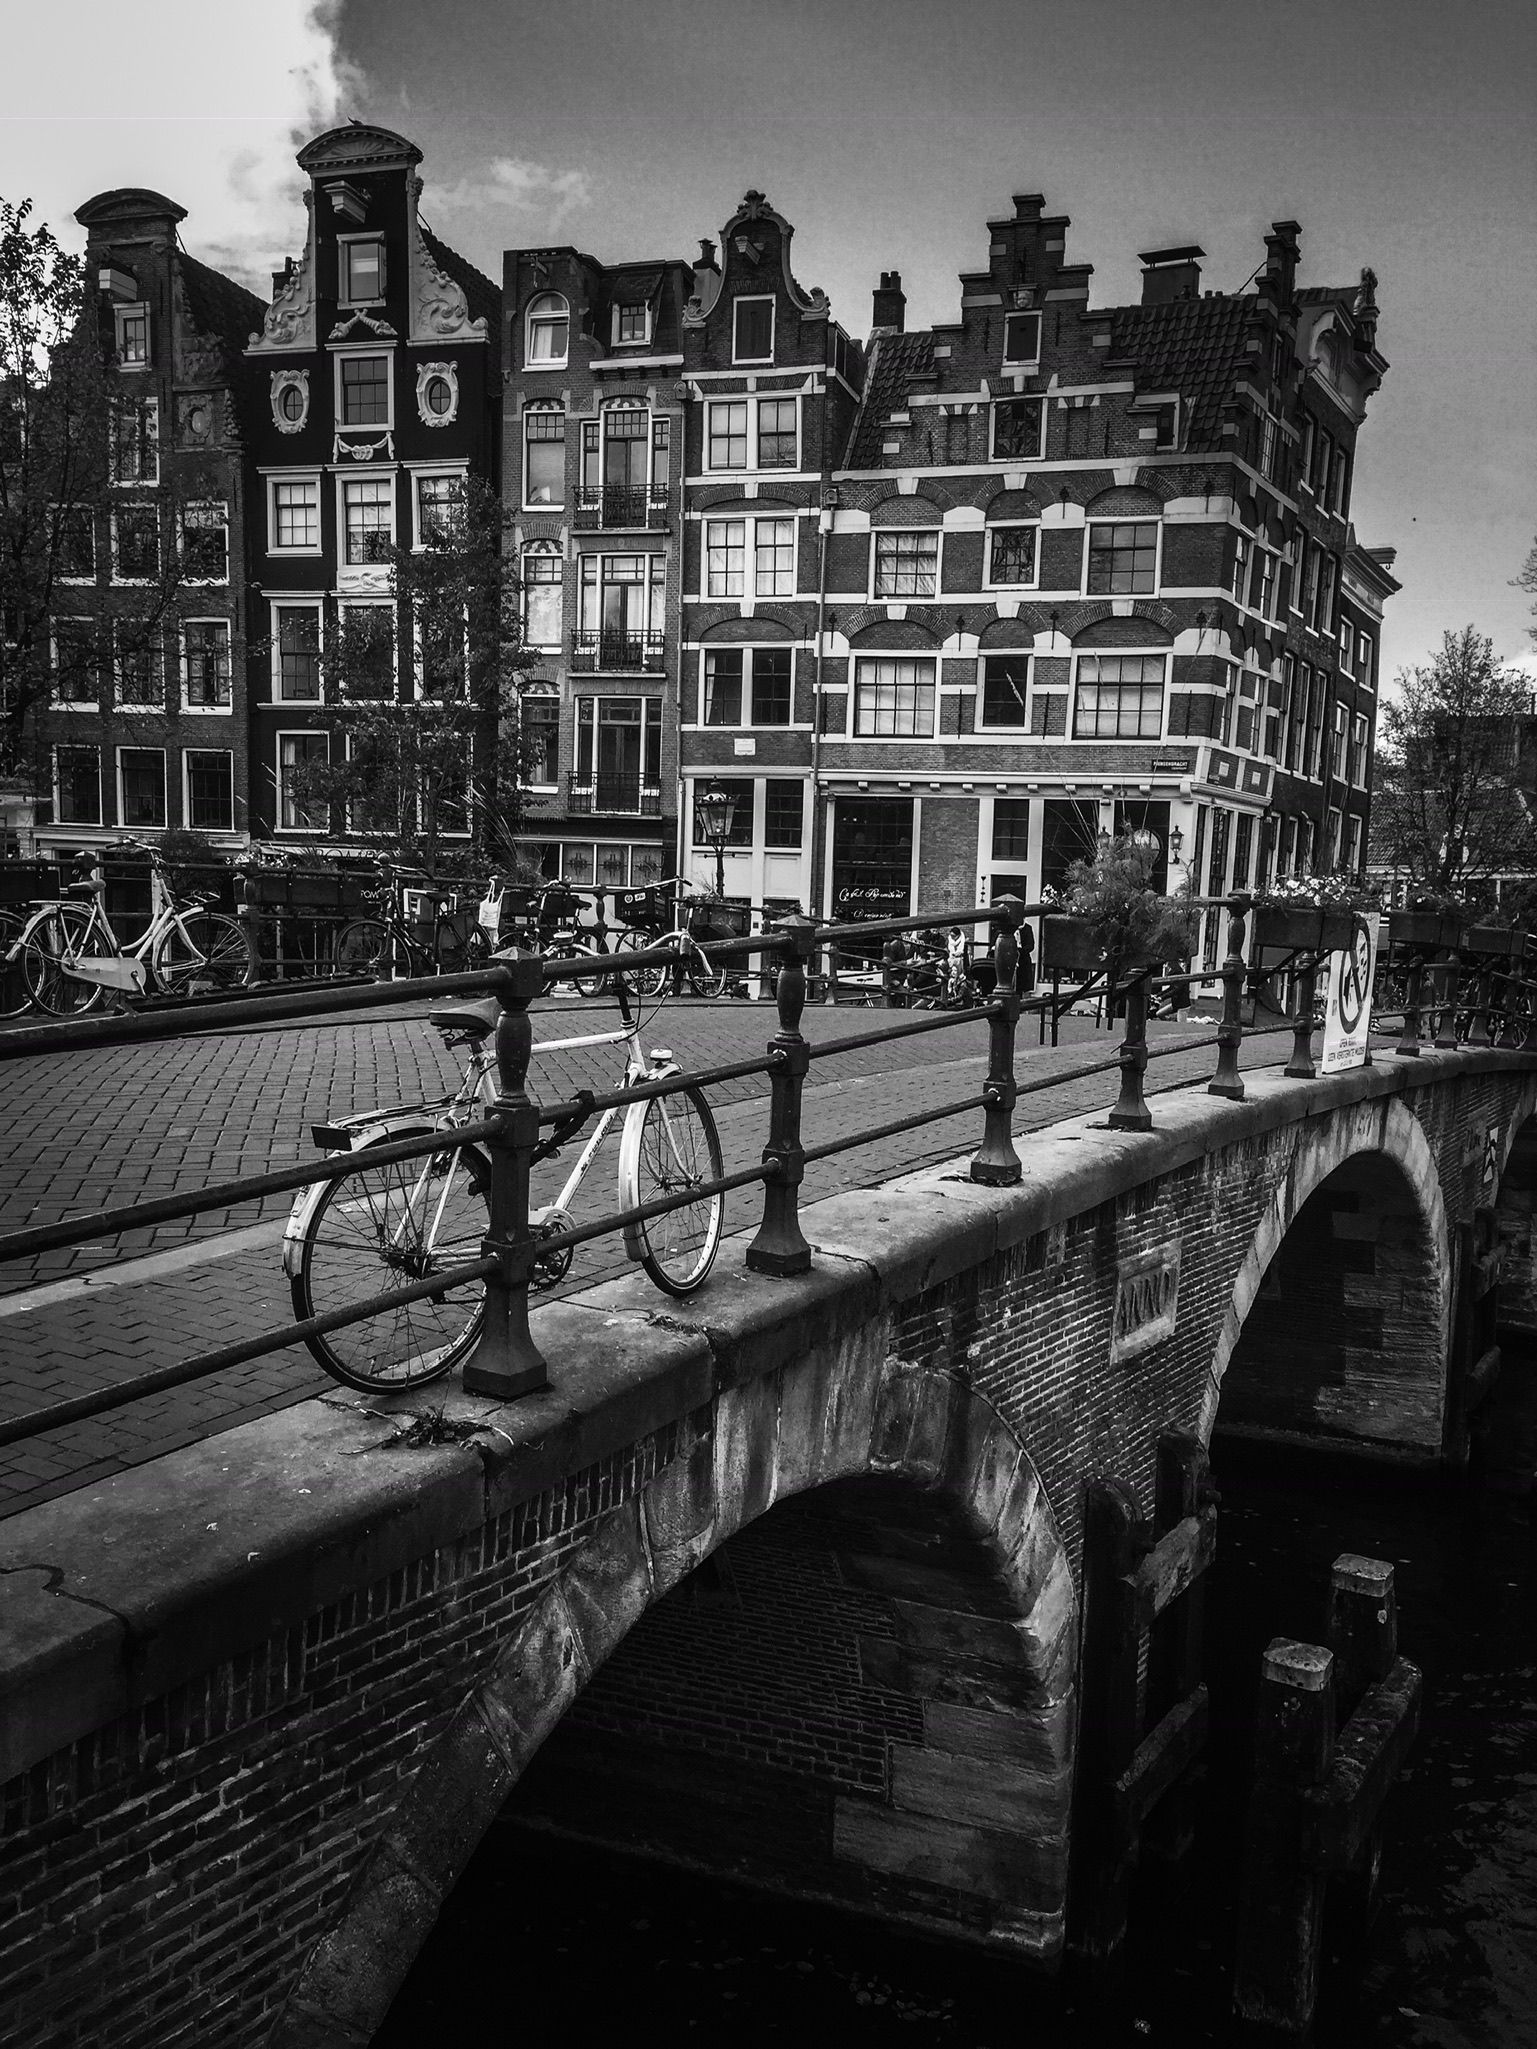 Classic Dutch canal houses